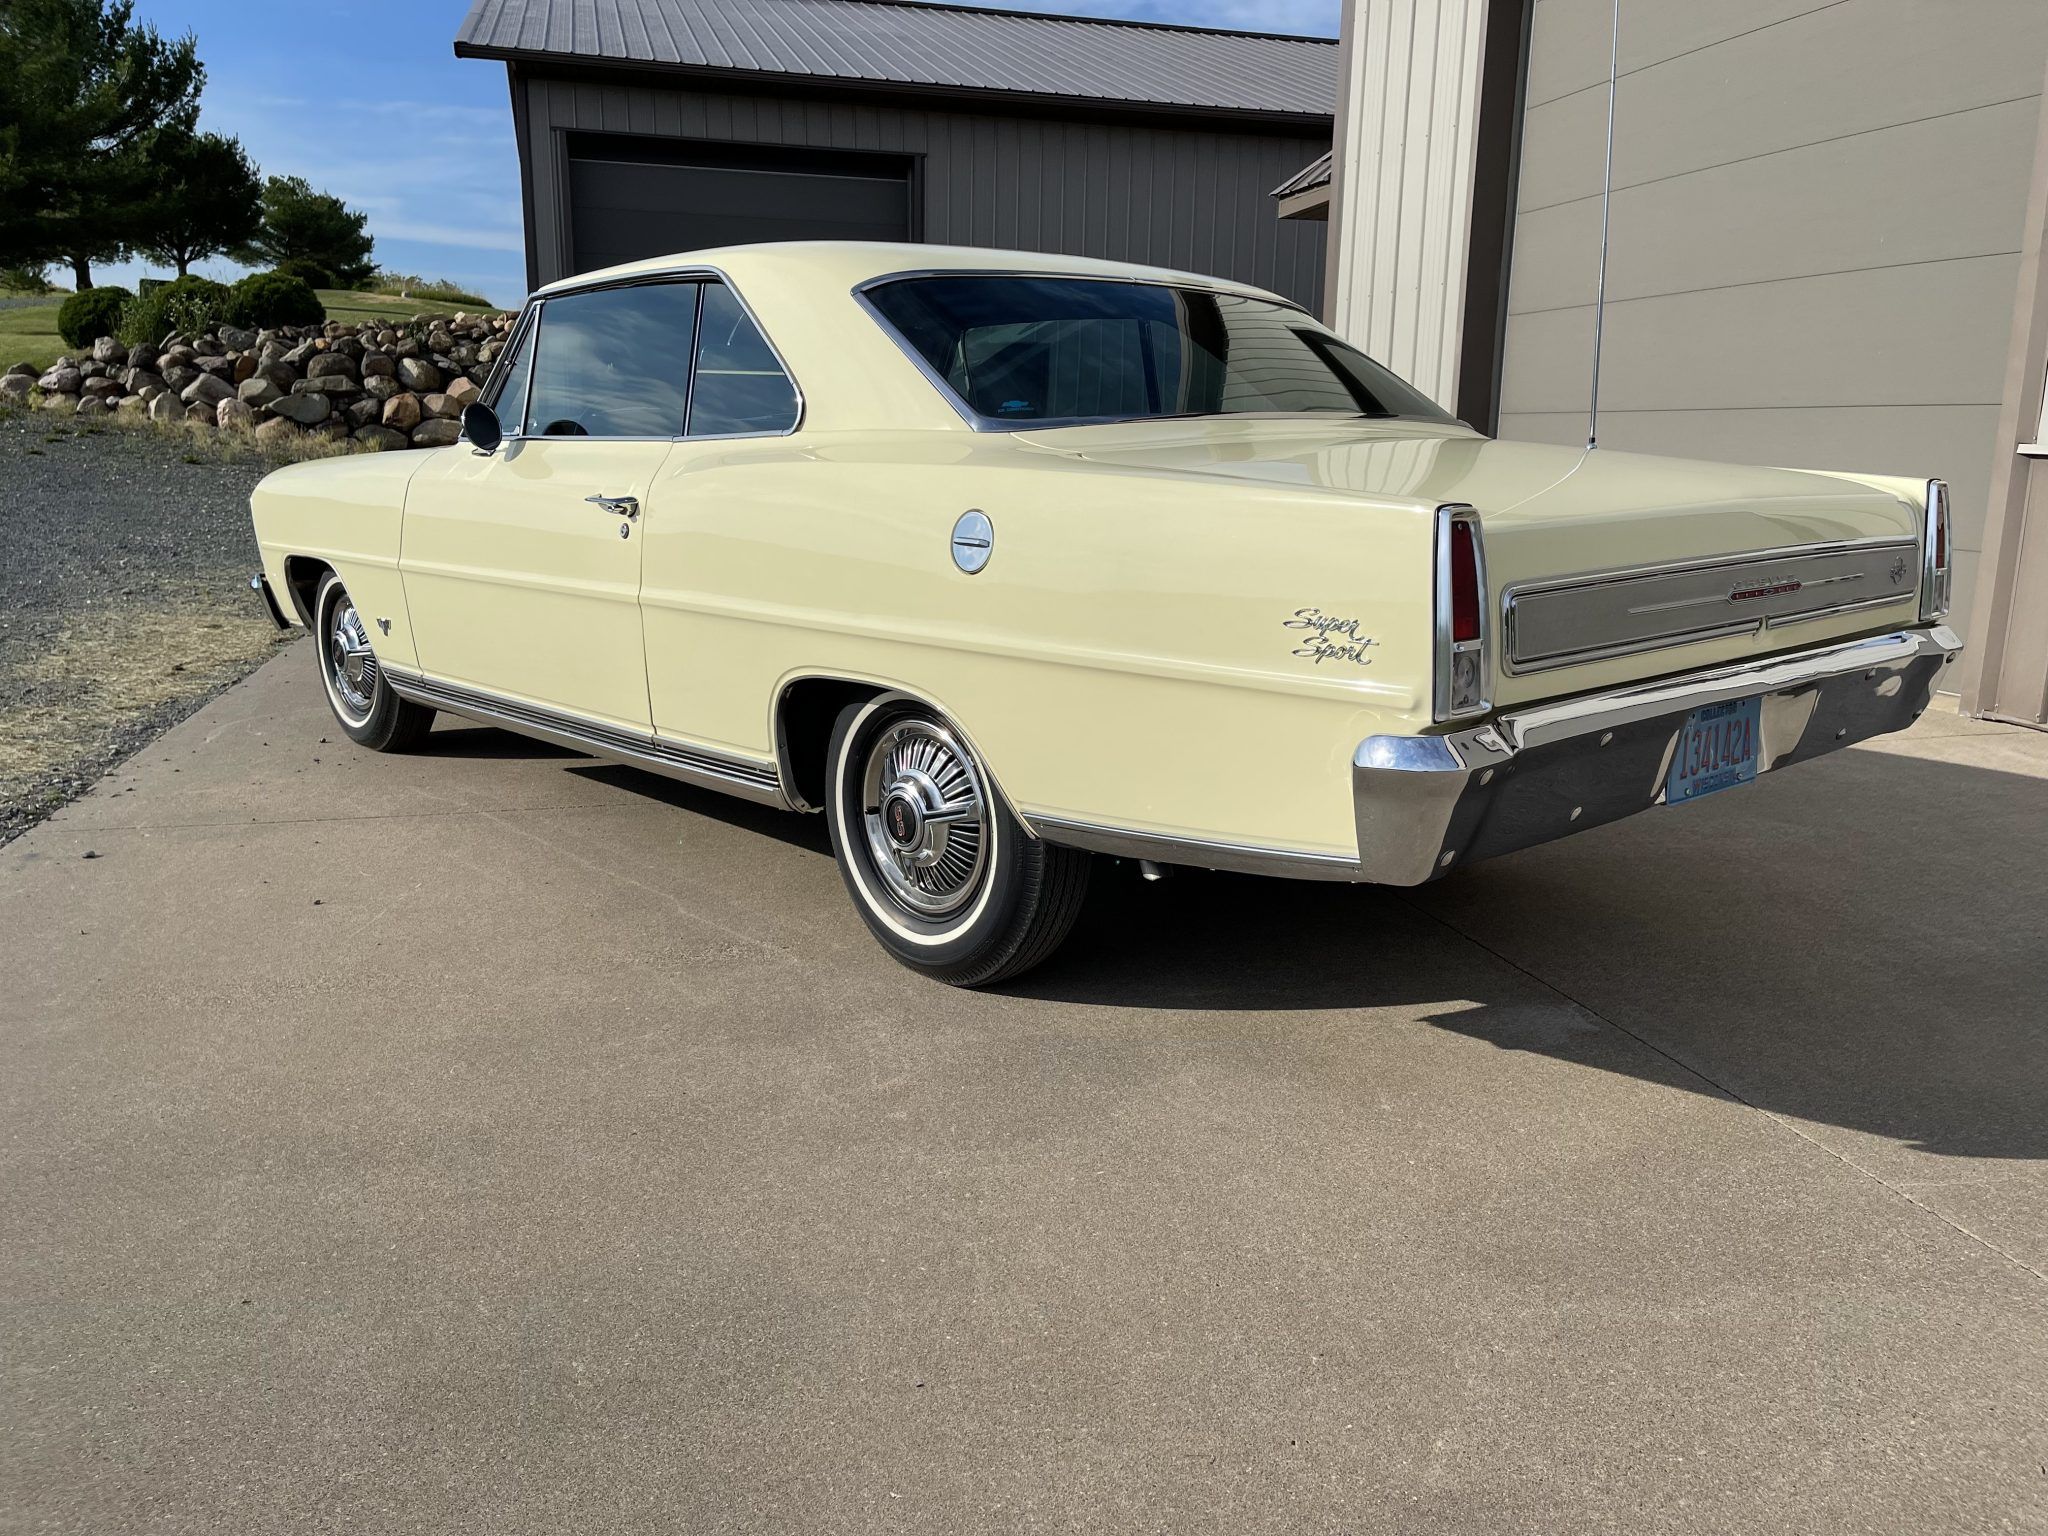 Yellow 1966-1967 Chevrolet Nova (Second Generation)